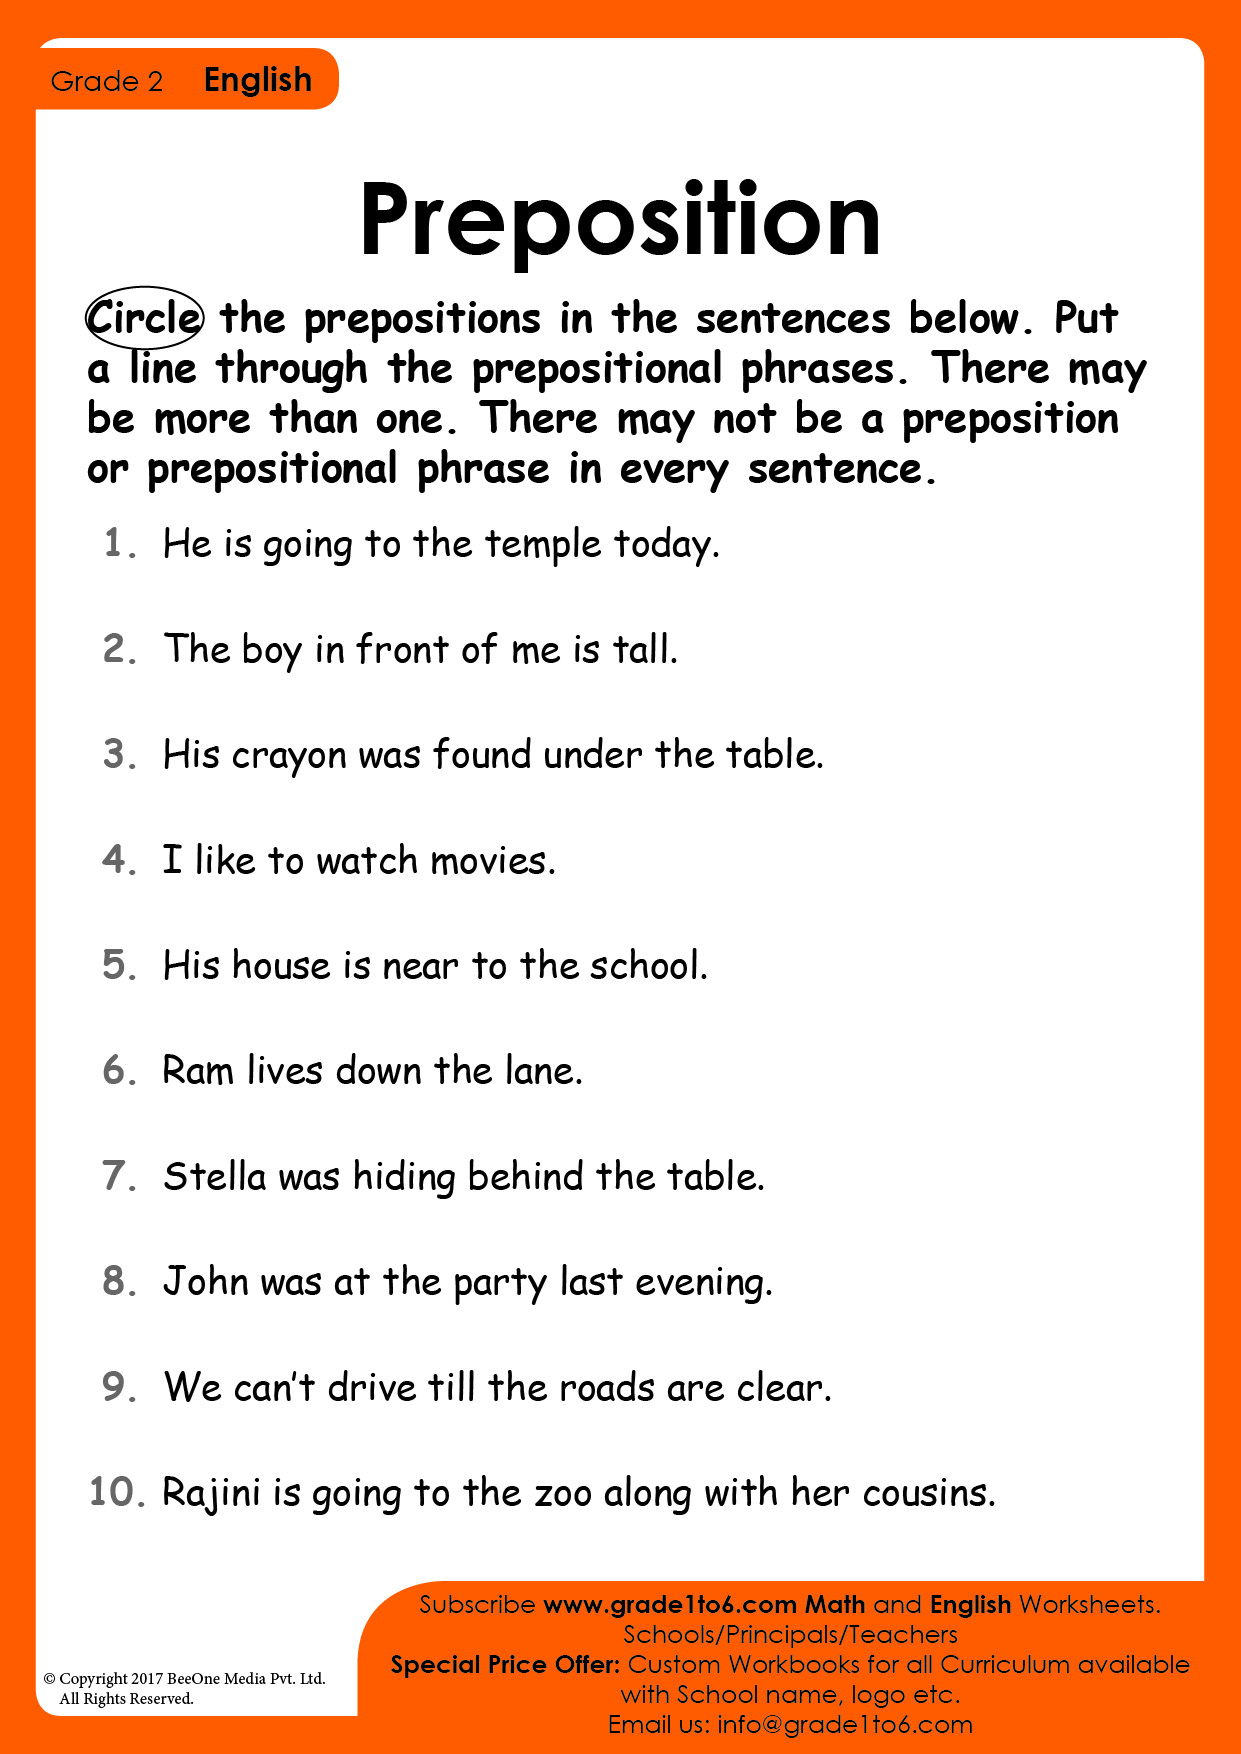 preposition-worksheets-for-grade-1